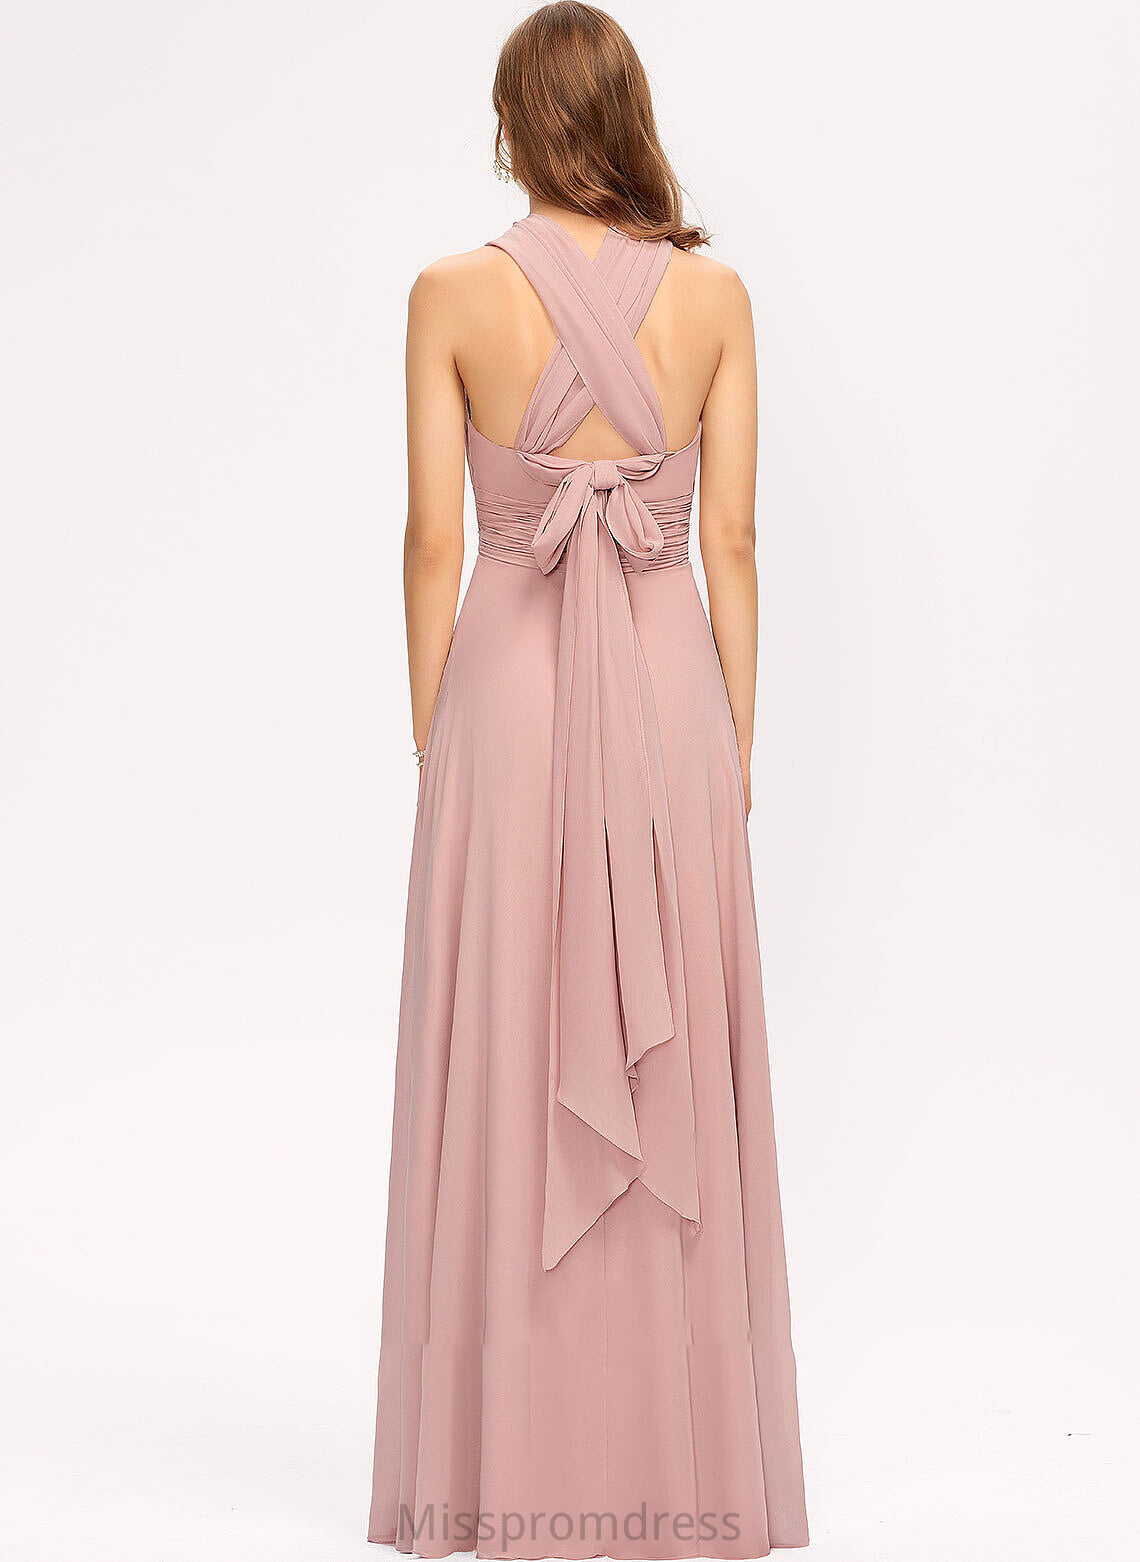 Embellishment Neckline V-neck Ruffle Silhouette A-Line Length One-Shoulder Halter Fabric Floor-Length Nadine Bridesmaid Dresses